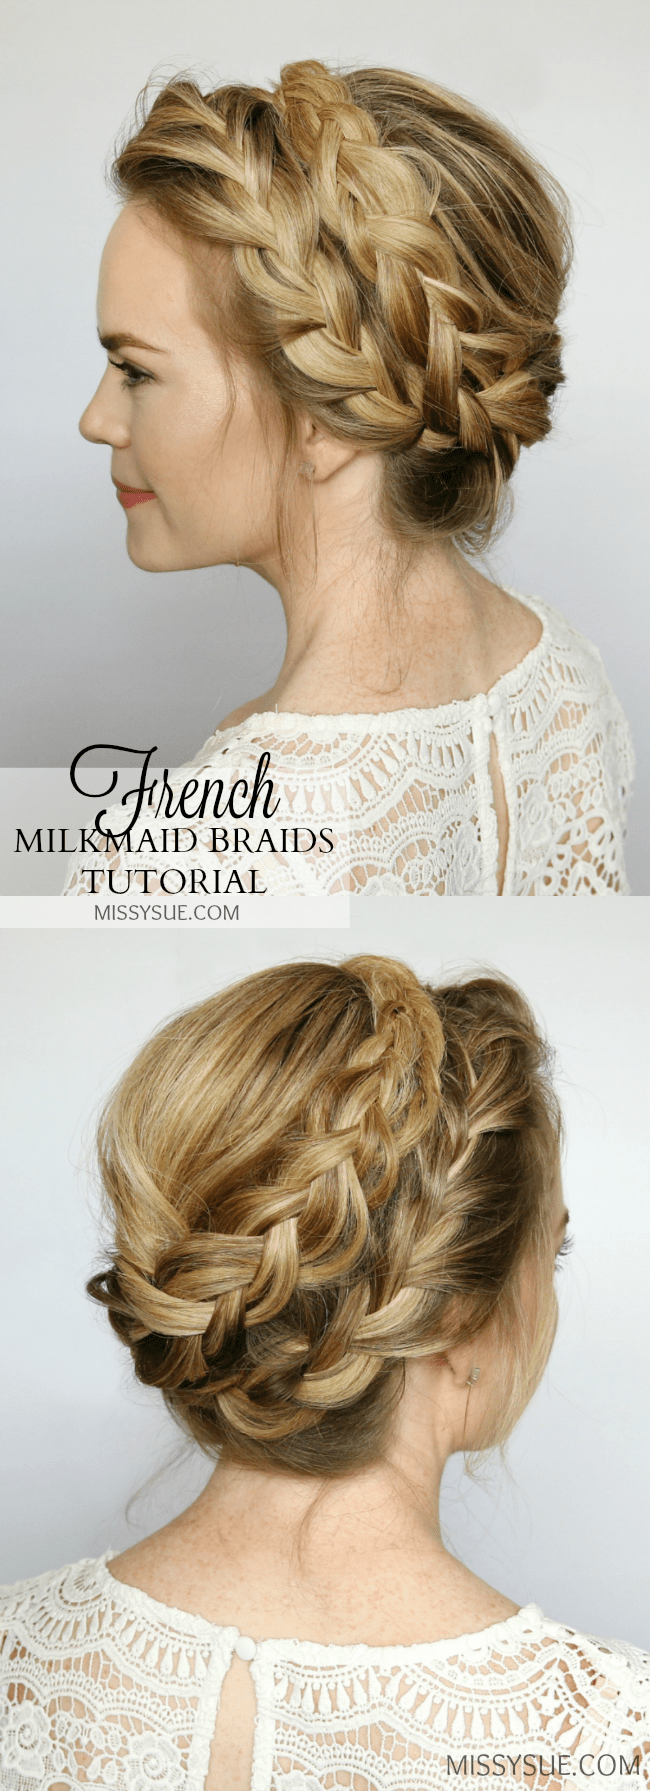 french-milkmaid-braids-hair-tutorial